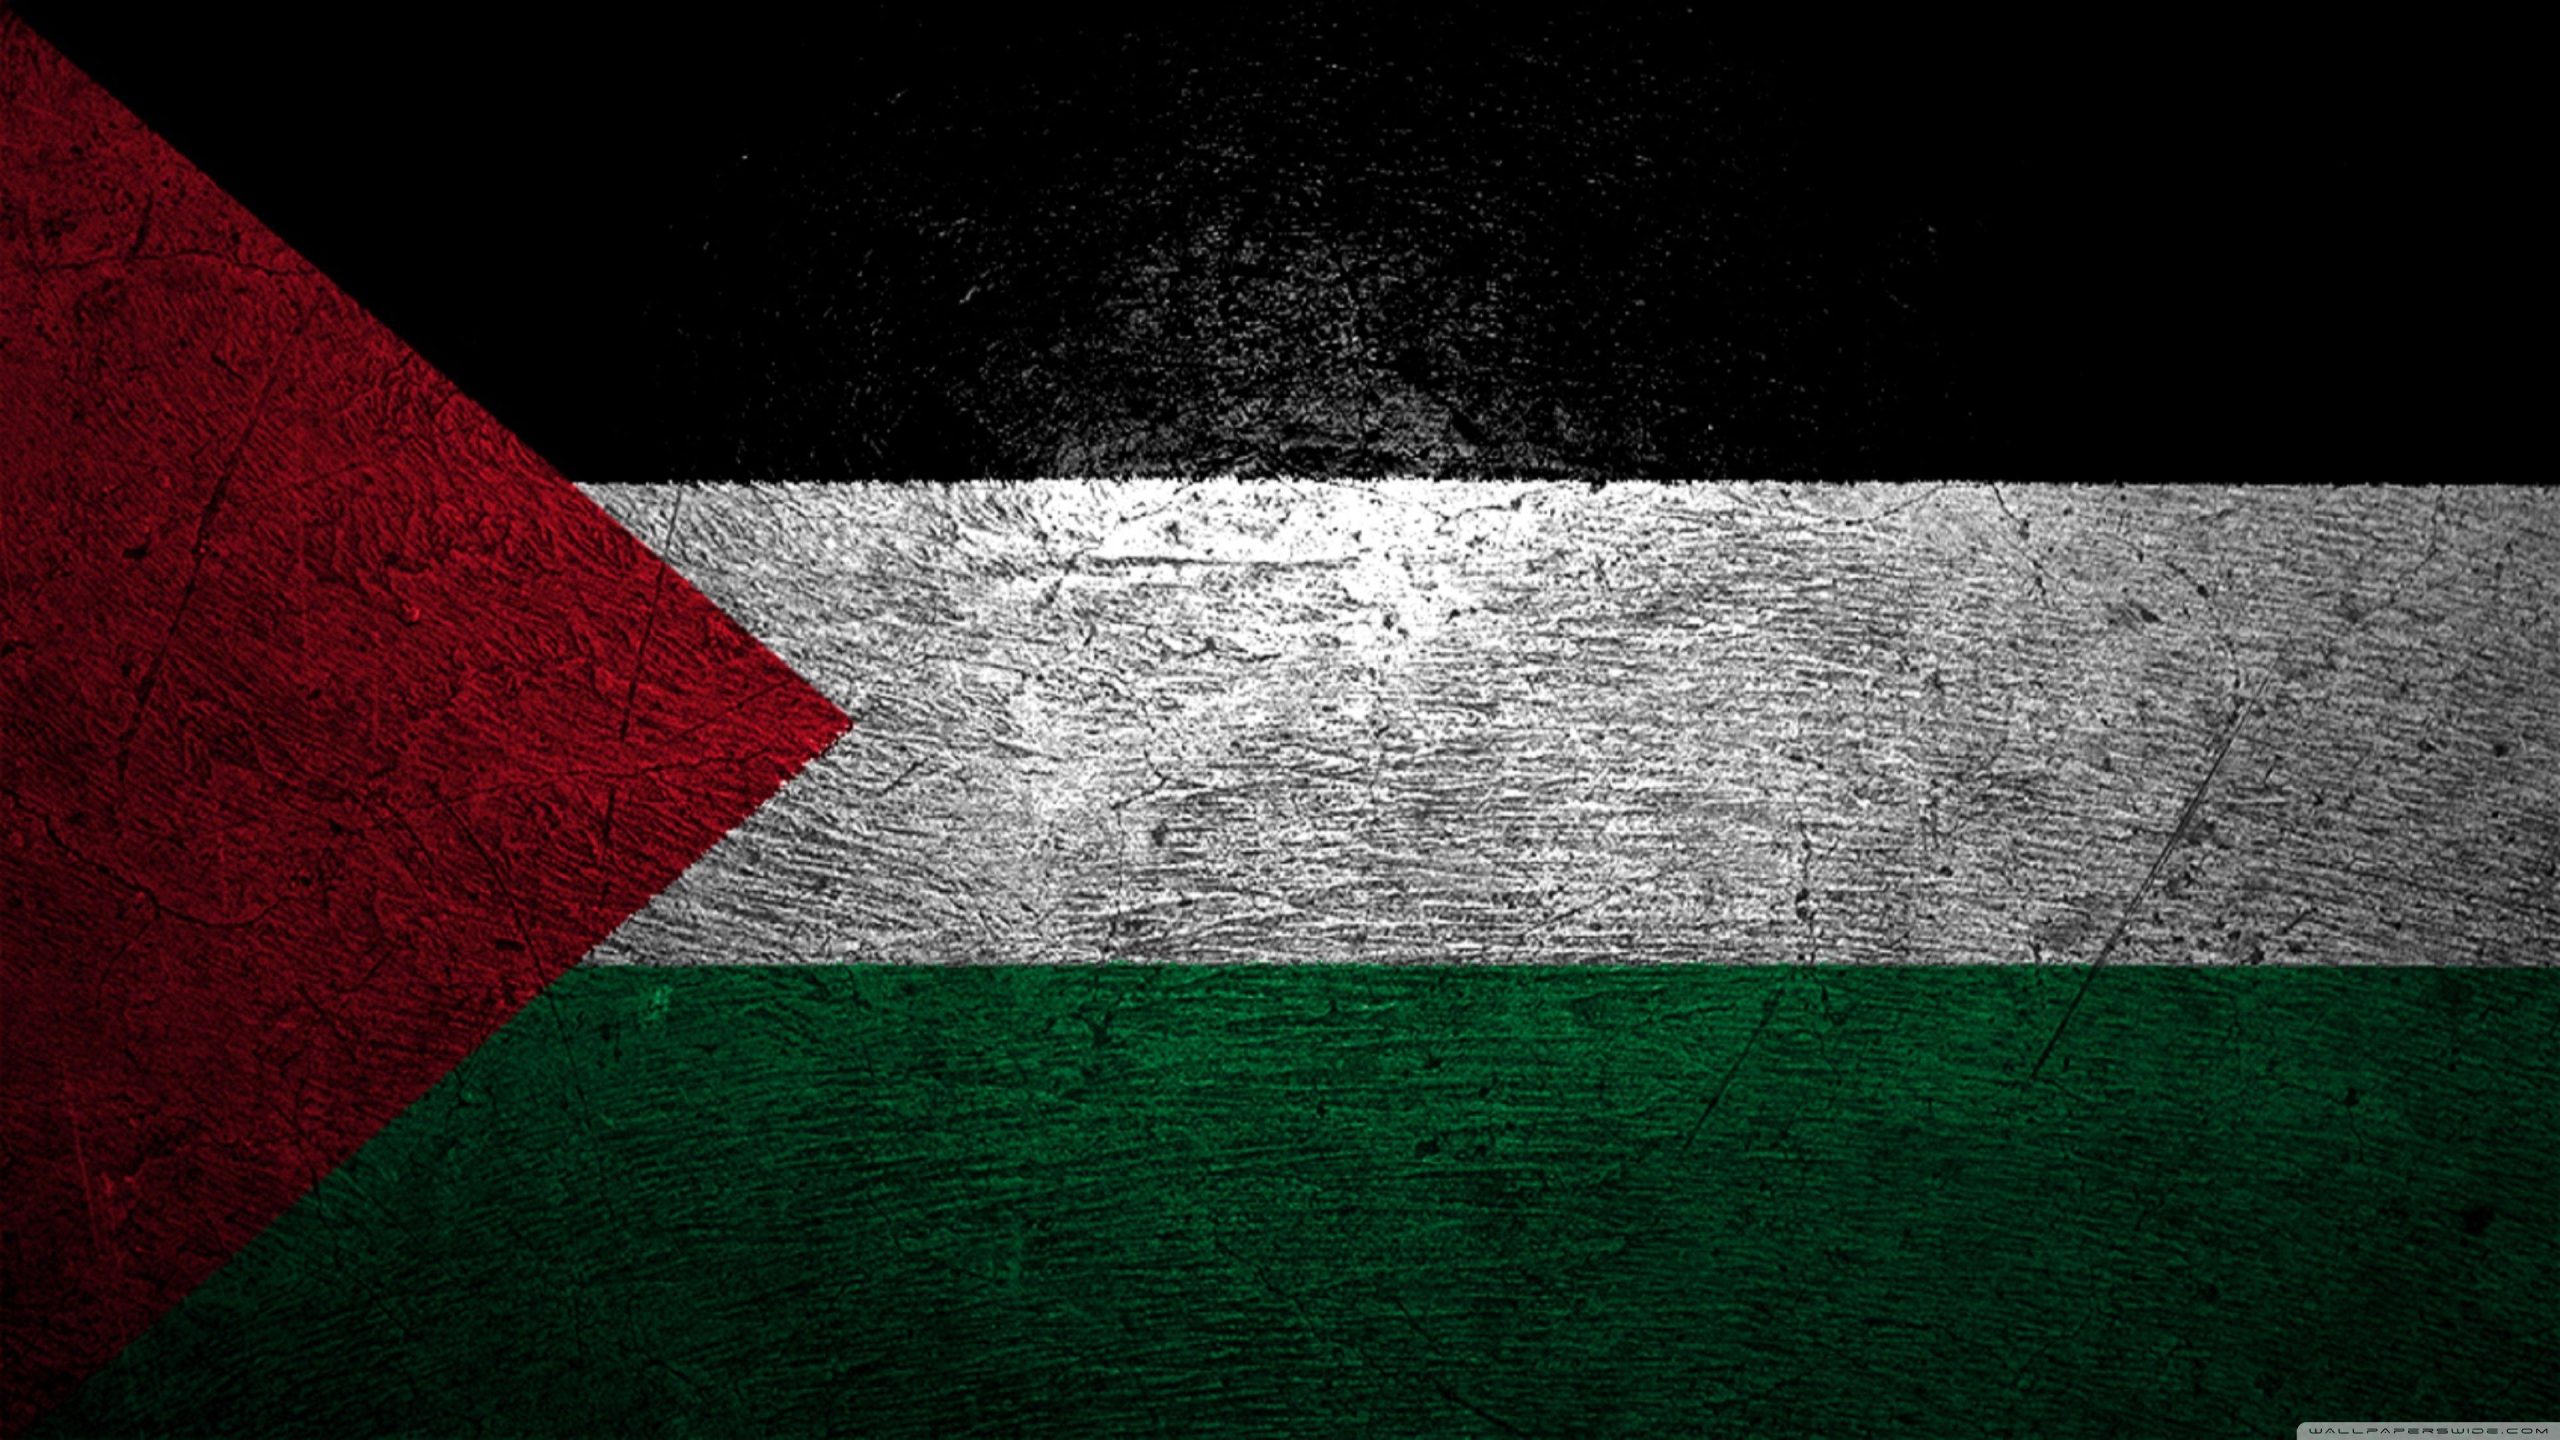 Palestine Flag ipad wallpaper